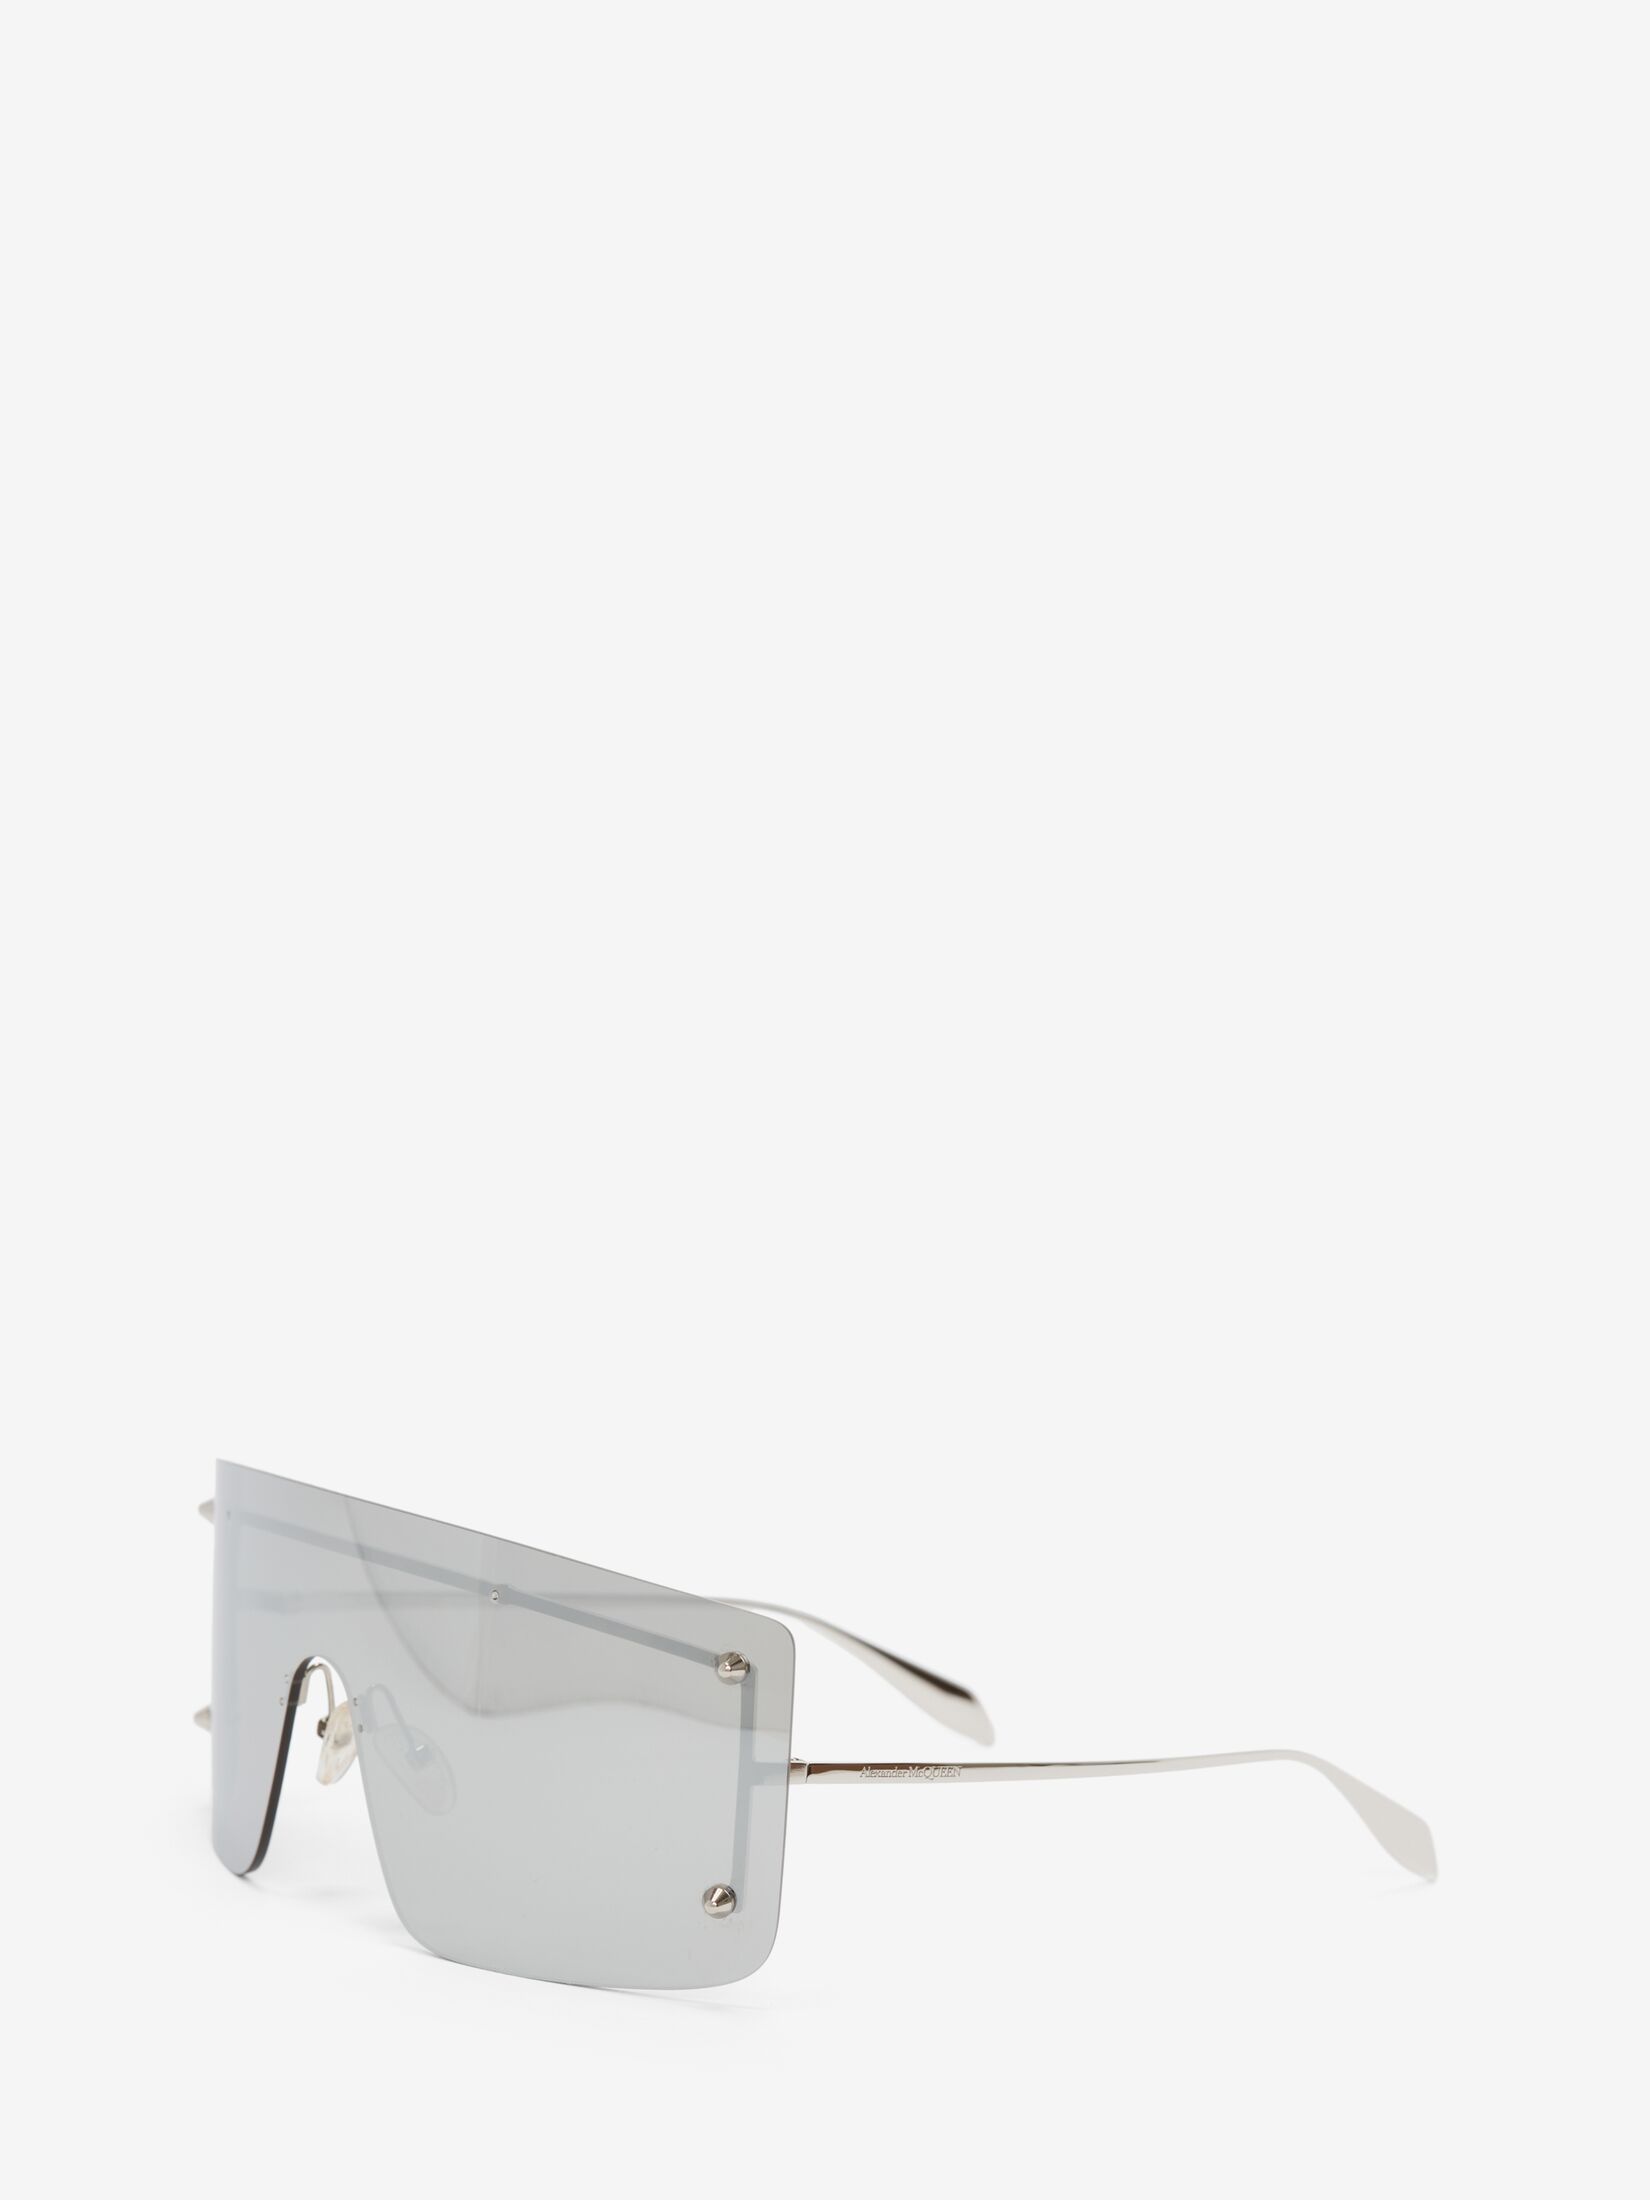 Spike Studs Mask Sunglasses in Smoke/Silver | Alexander McQueen PT